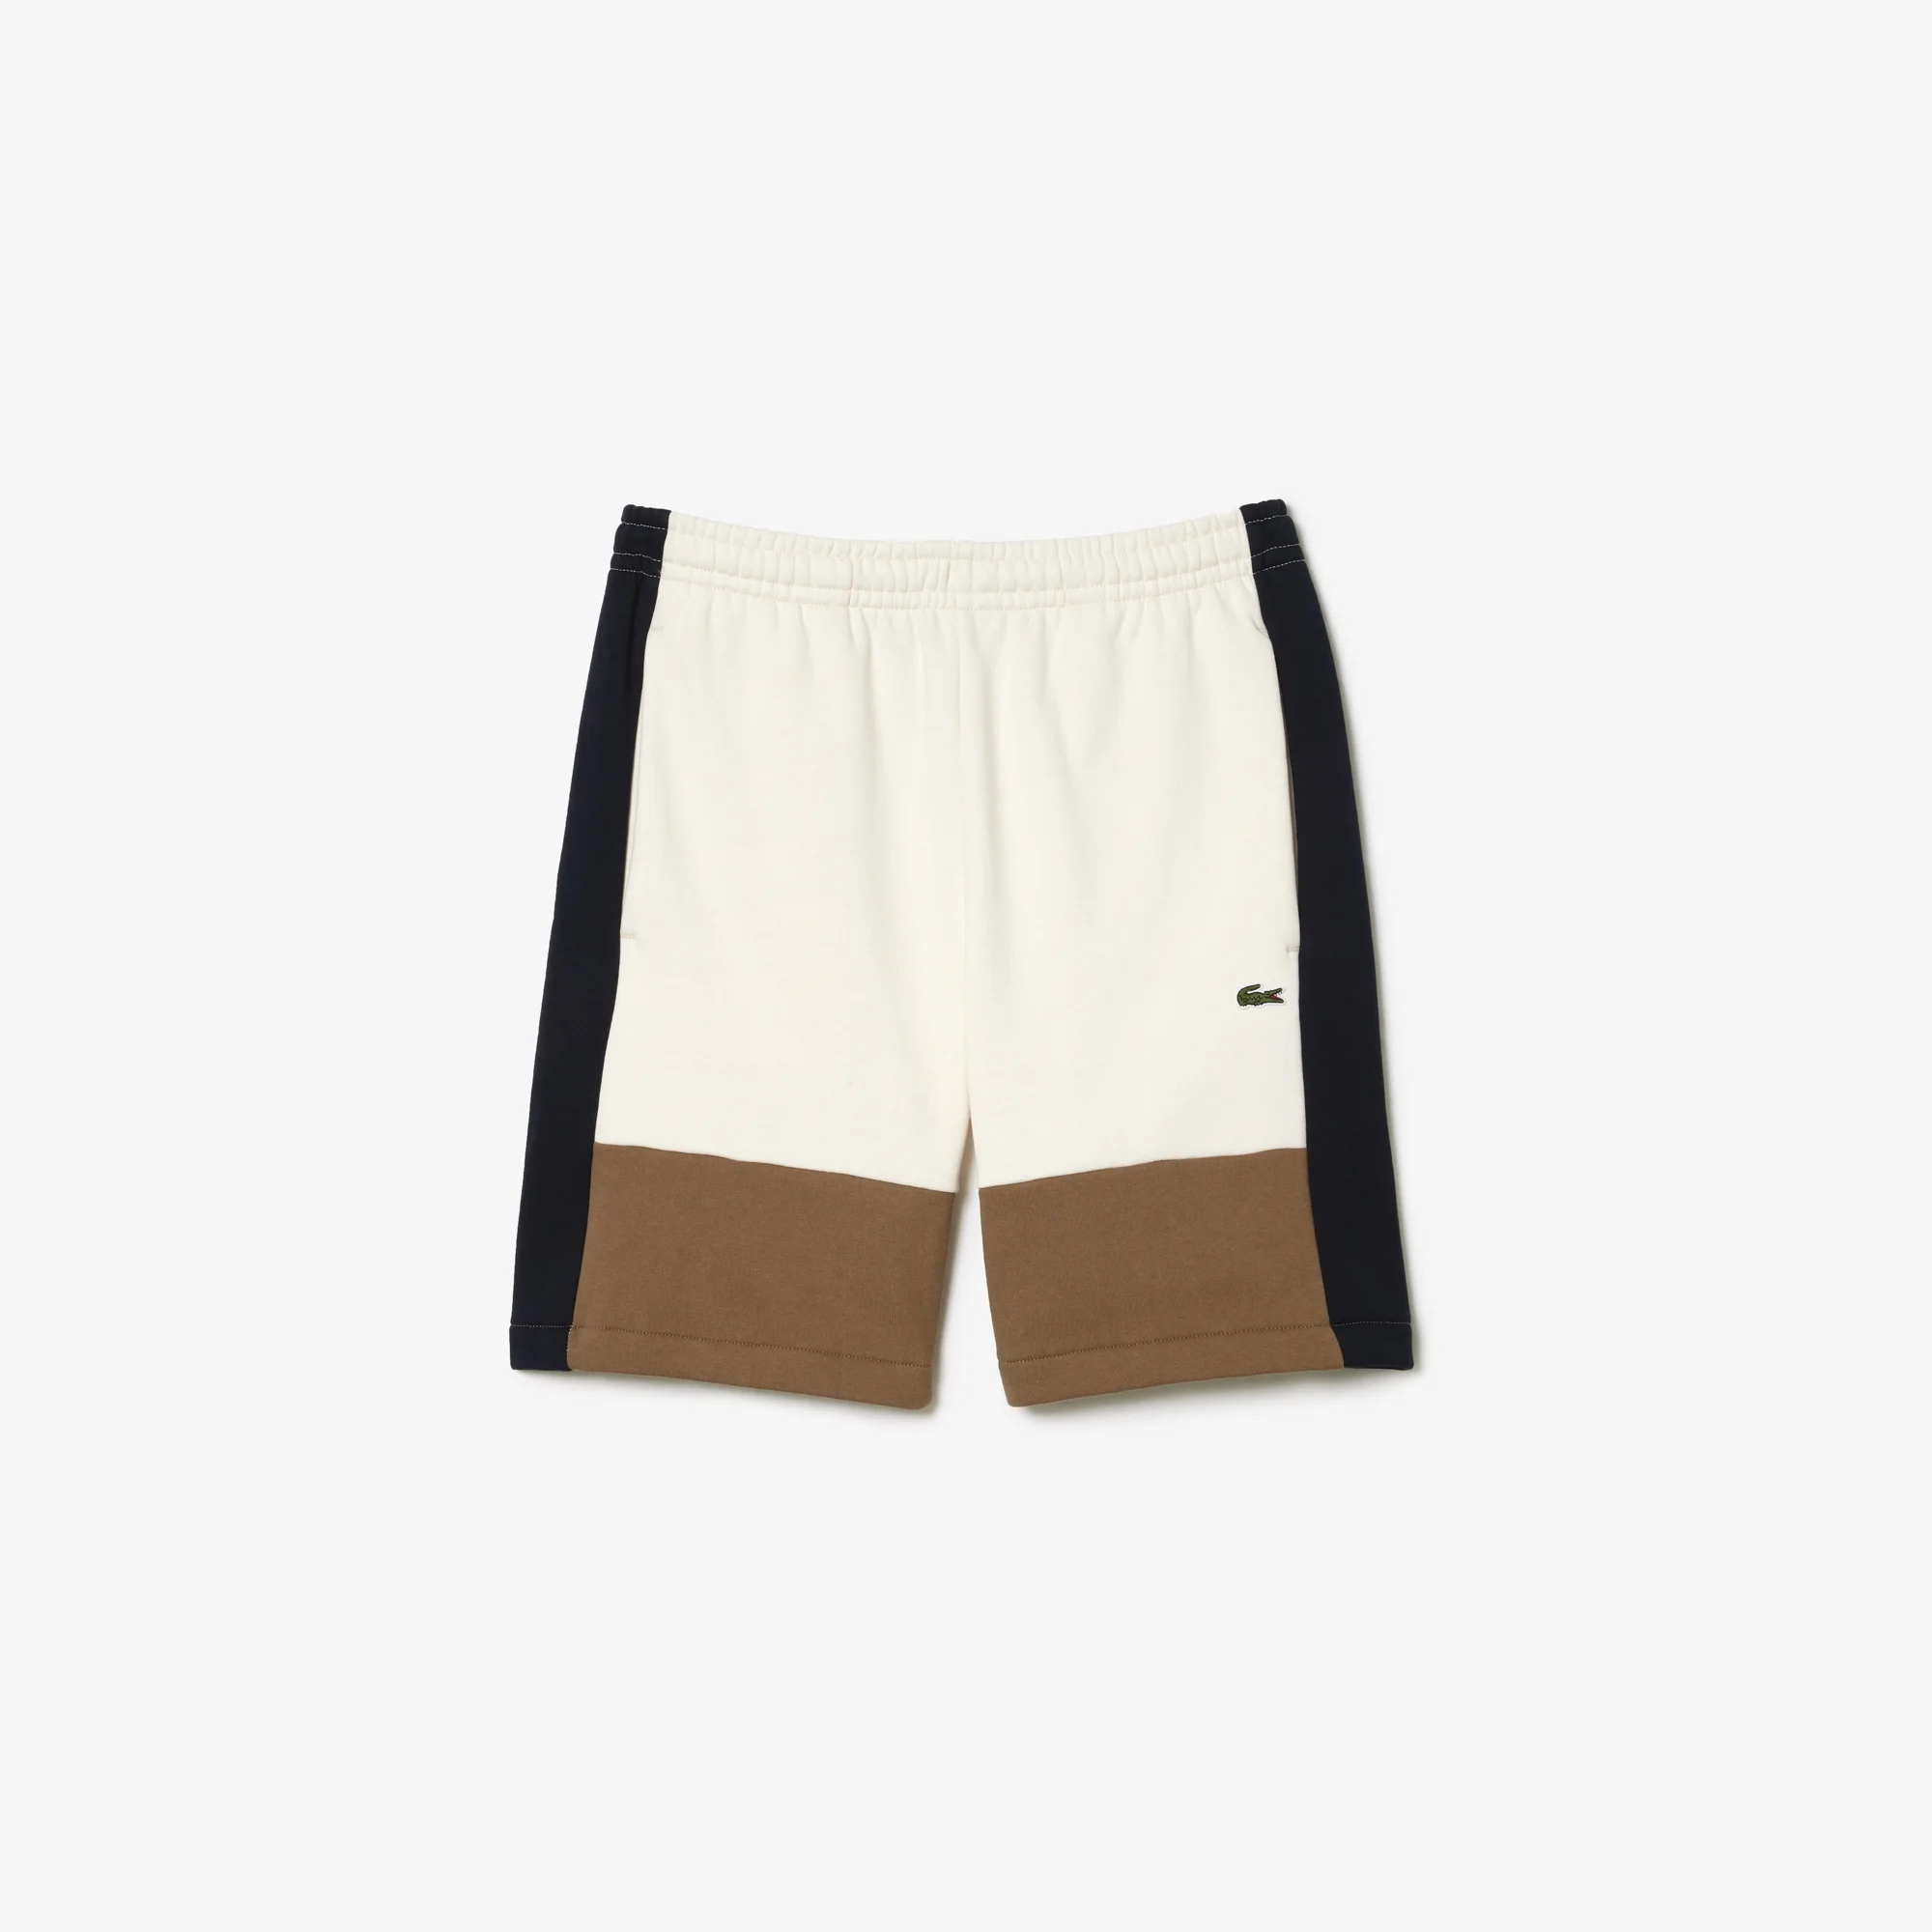 Men's Lacoste Slim Fit Organic Cotton Bermuda Shorts